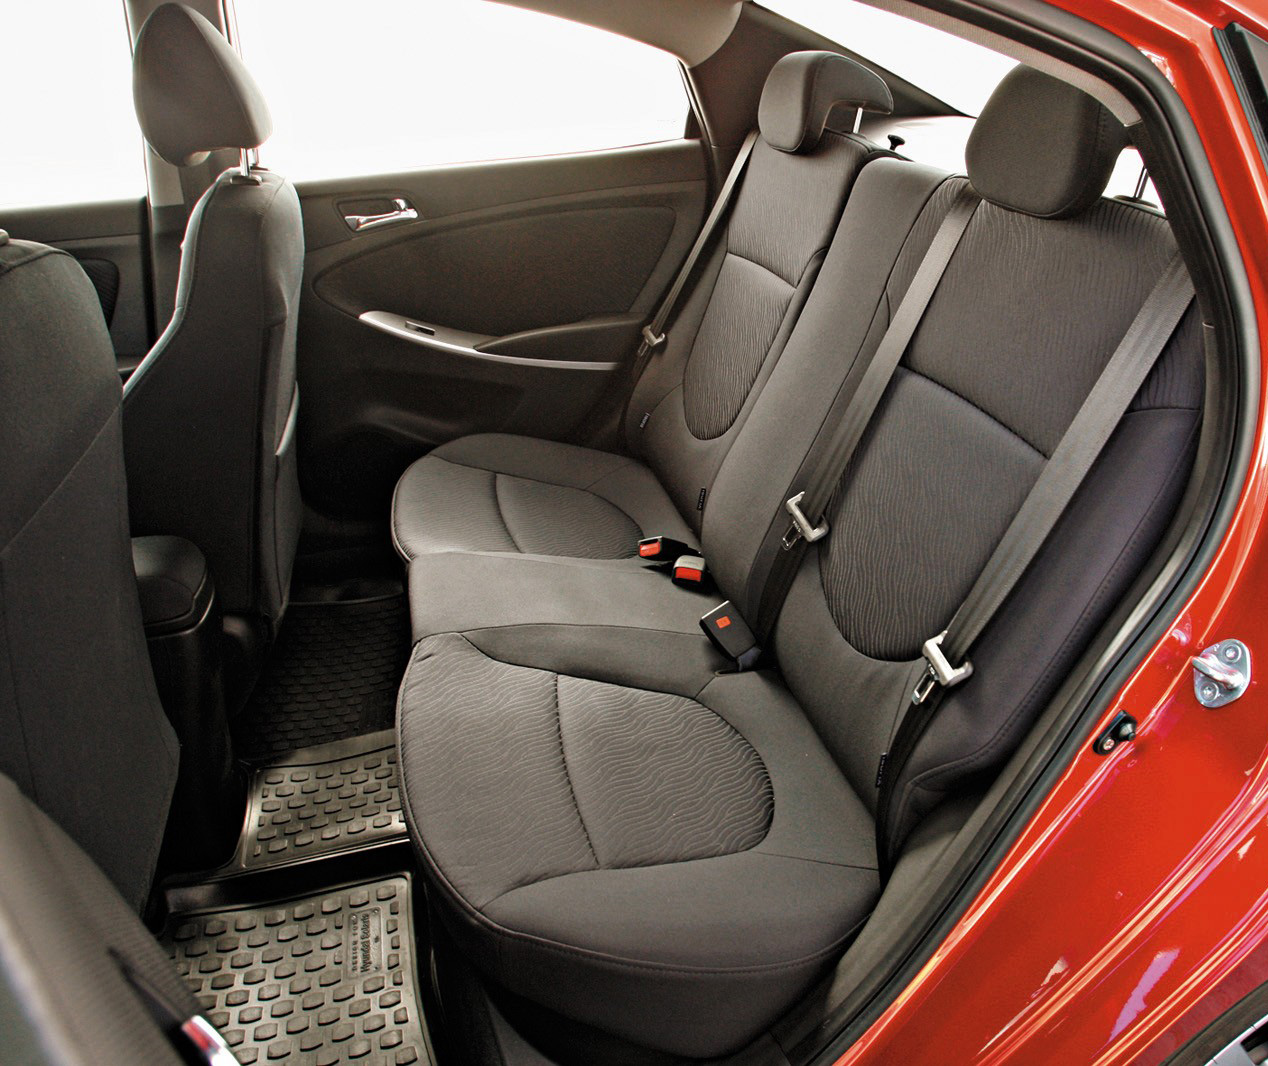 Ремни безопасности задних сидений на автомобиле Hyundai Solaris 2010-2016